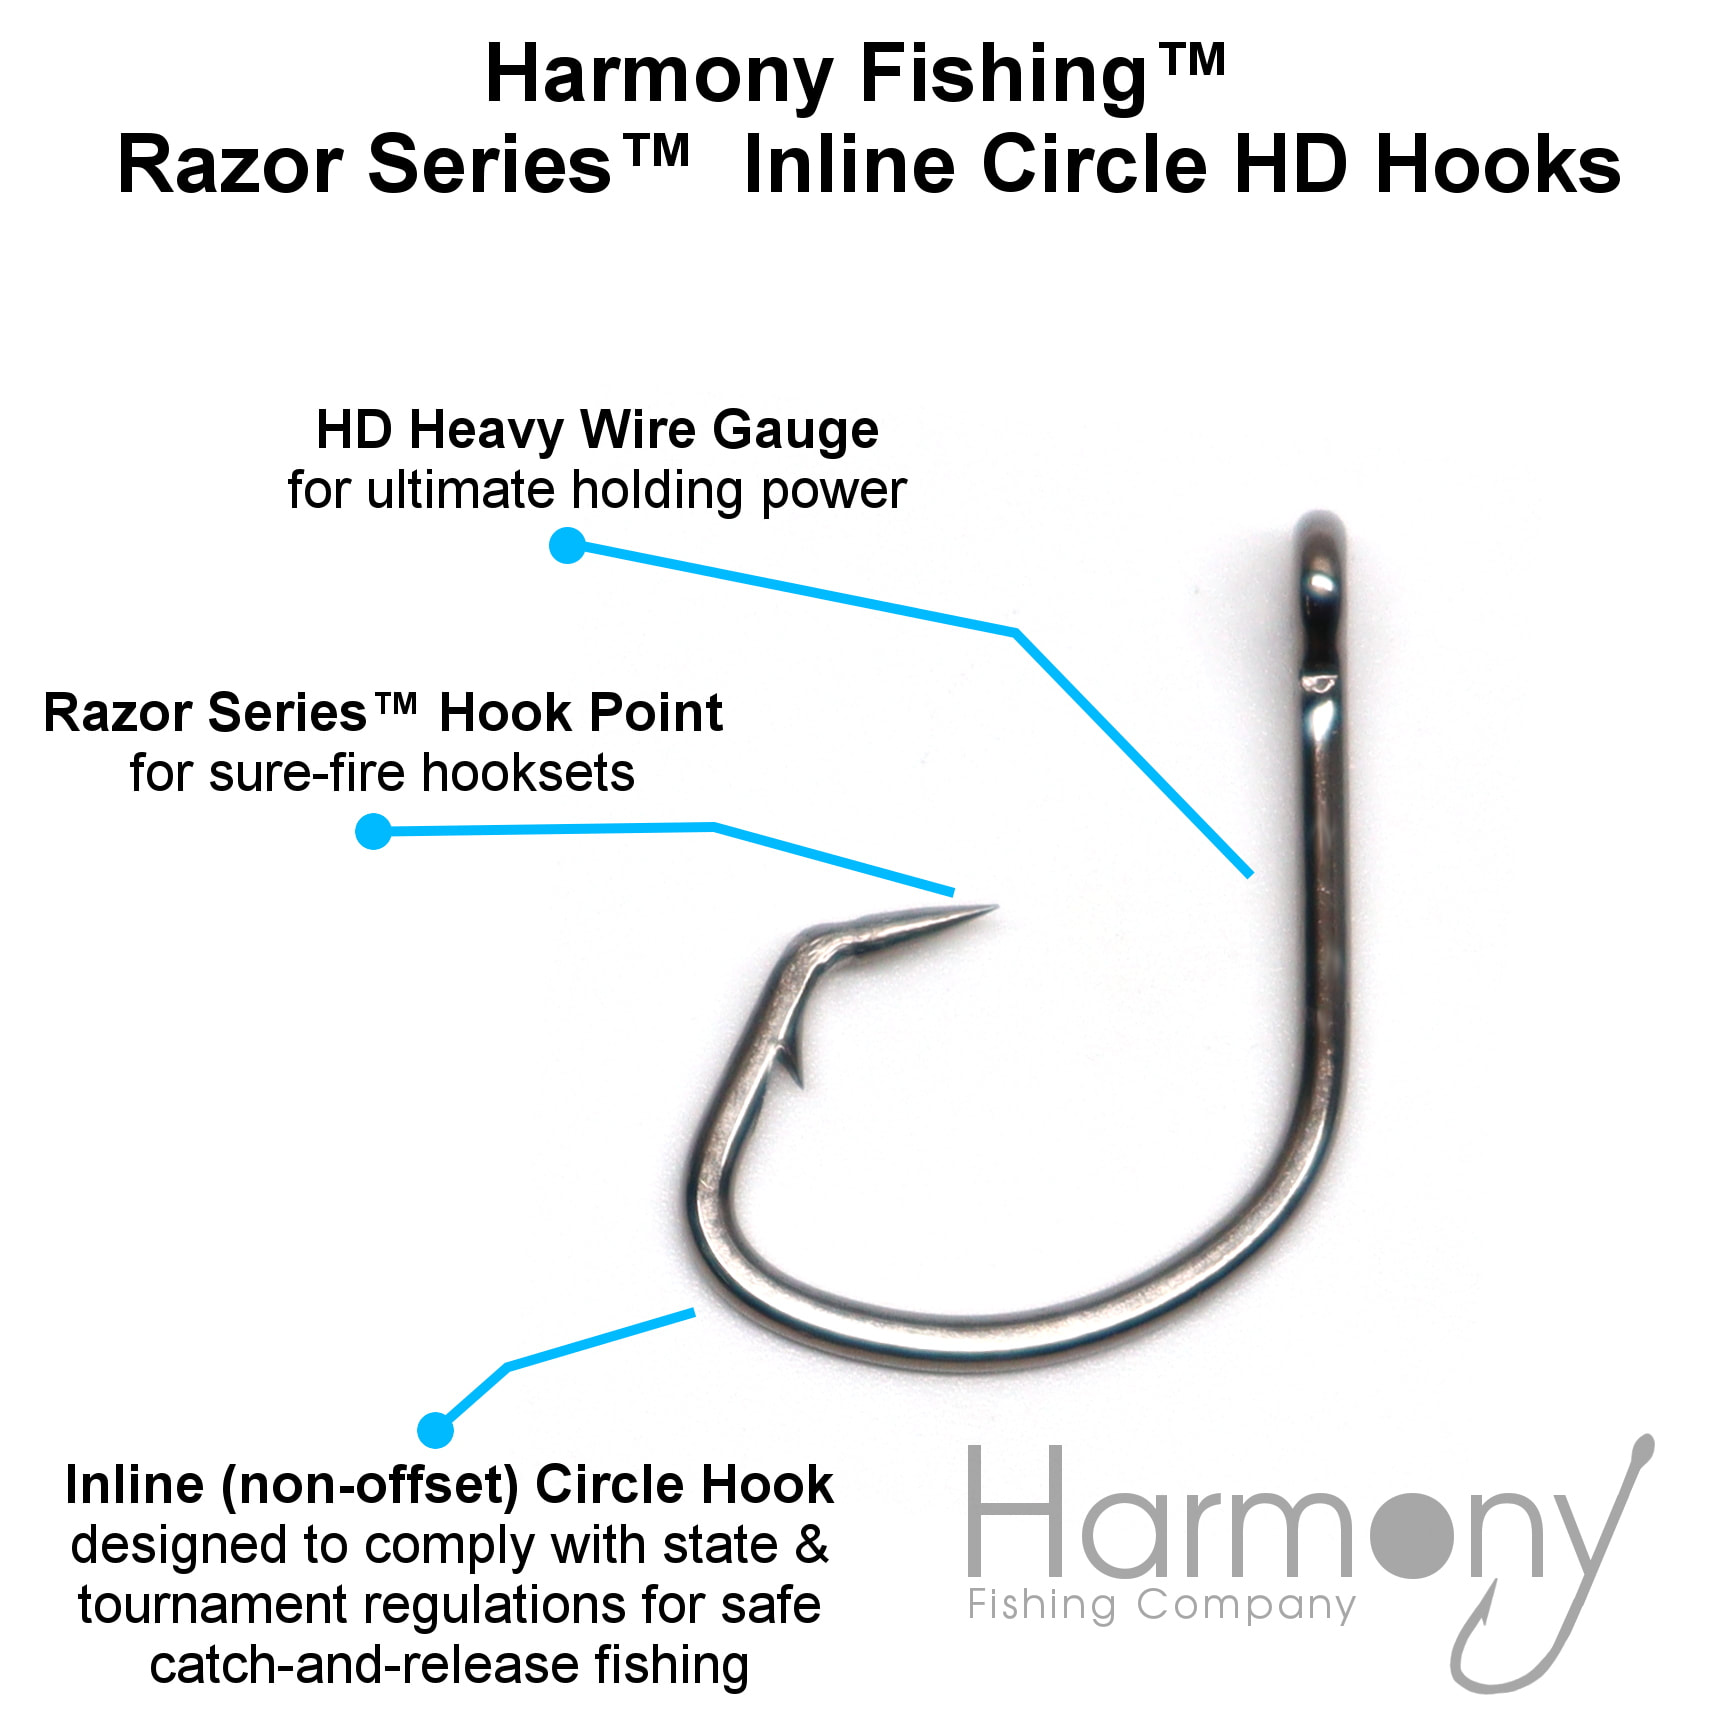 Harmony Fishing – Razor Series Inline Circle HD Hooks